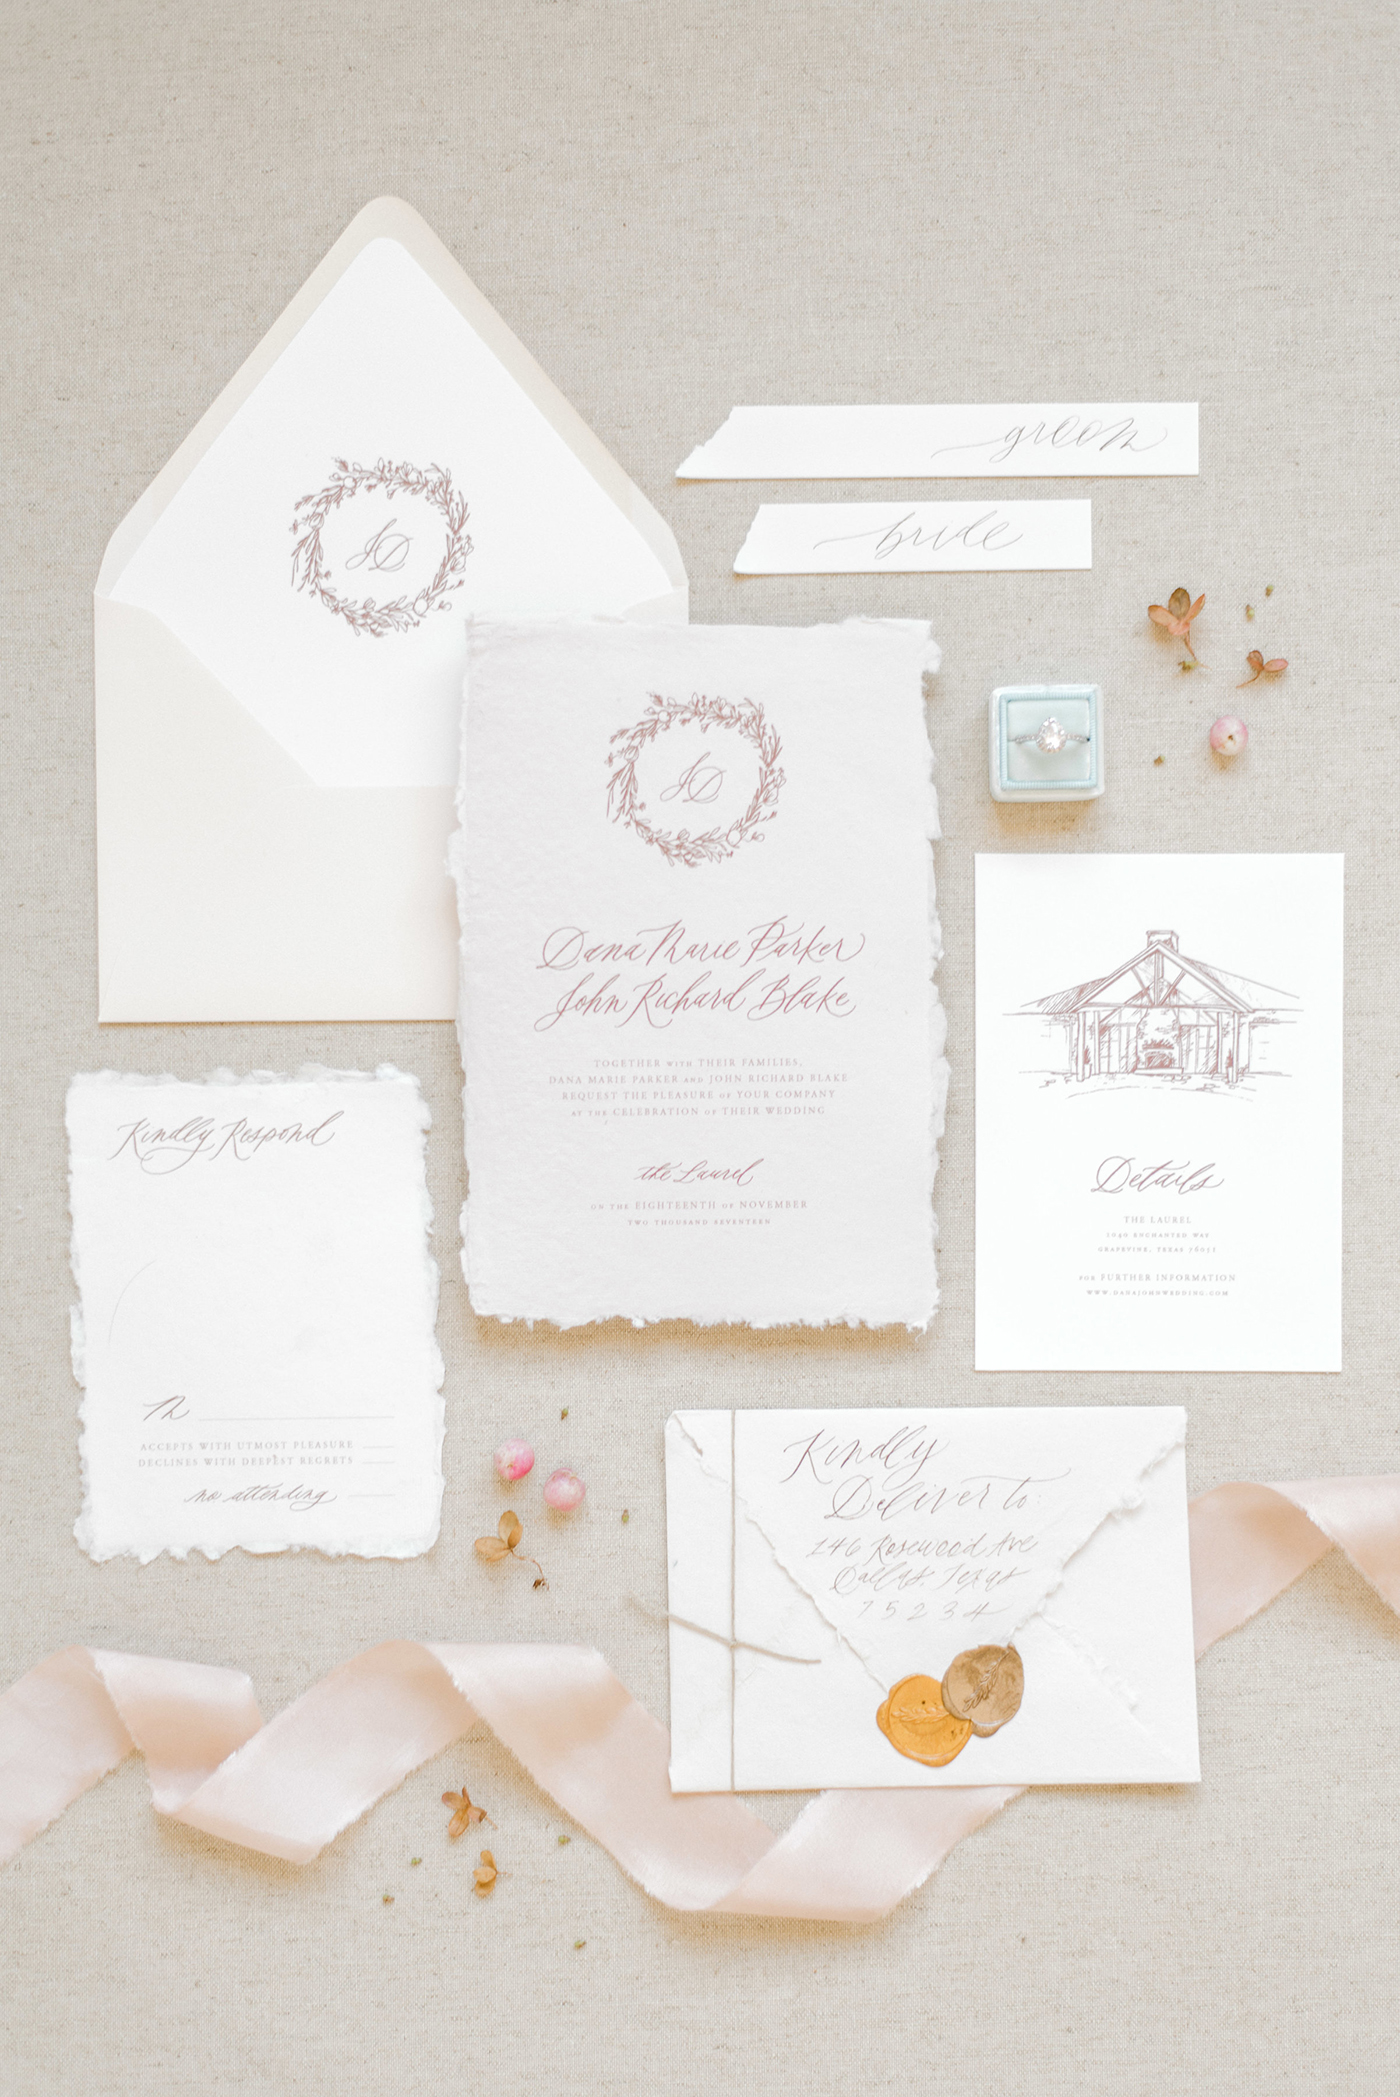 Custom Wedding Stationery Design - Sarah Ann Design - Gray Door Photography